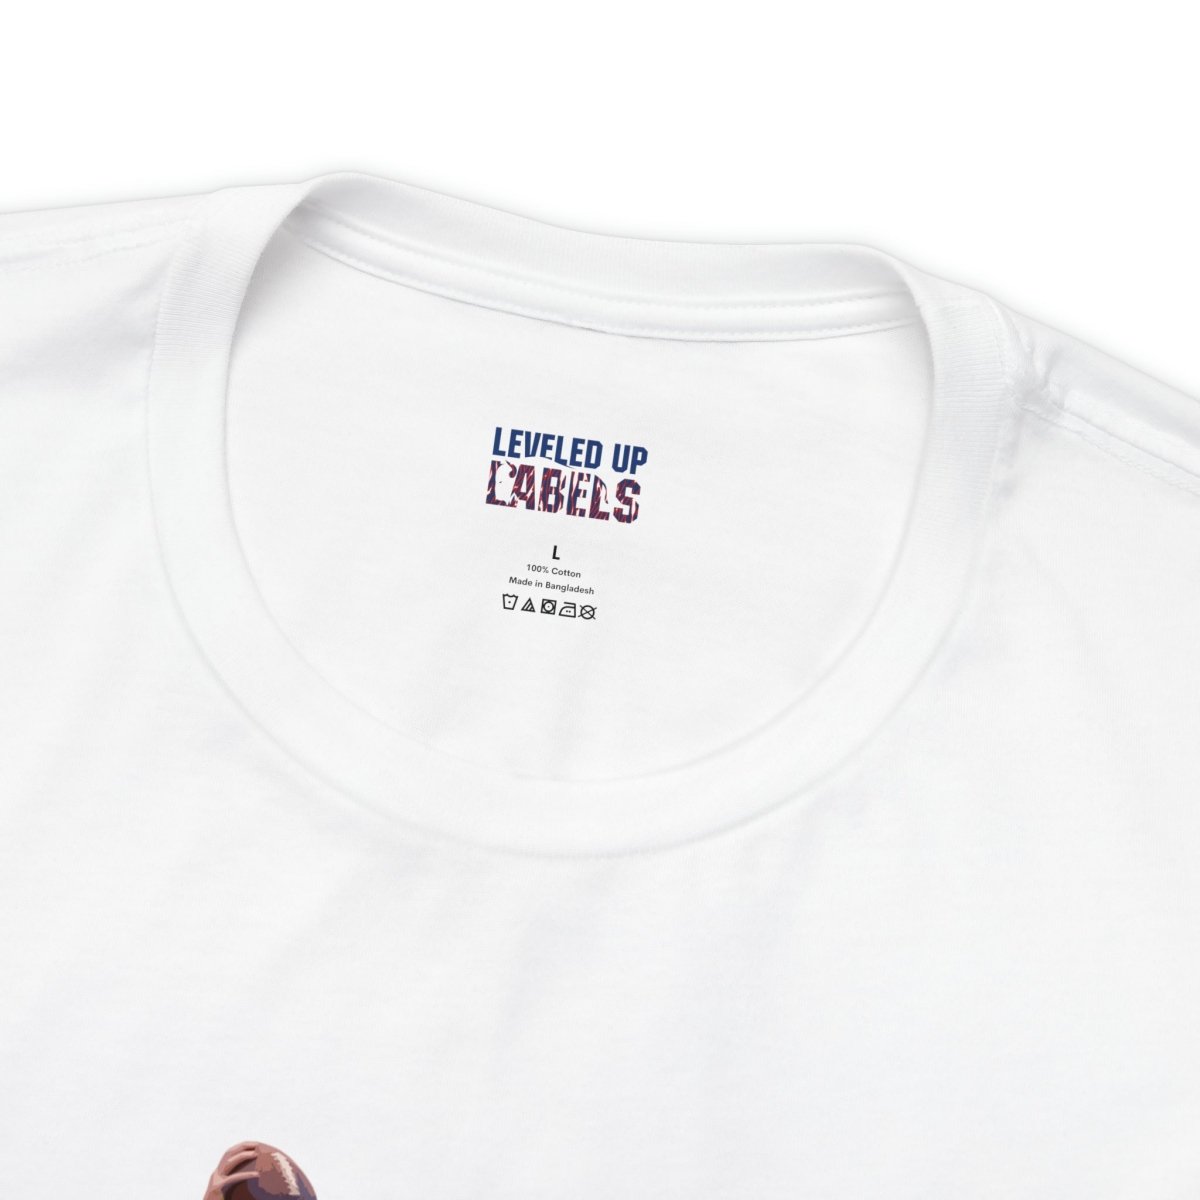 Josh Do It T - Shirt - Leveled Up Labels